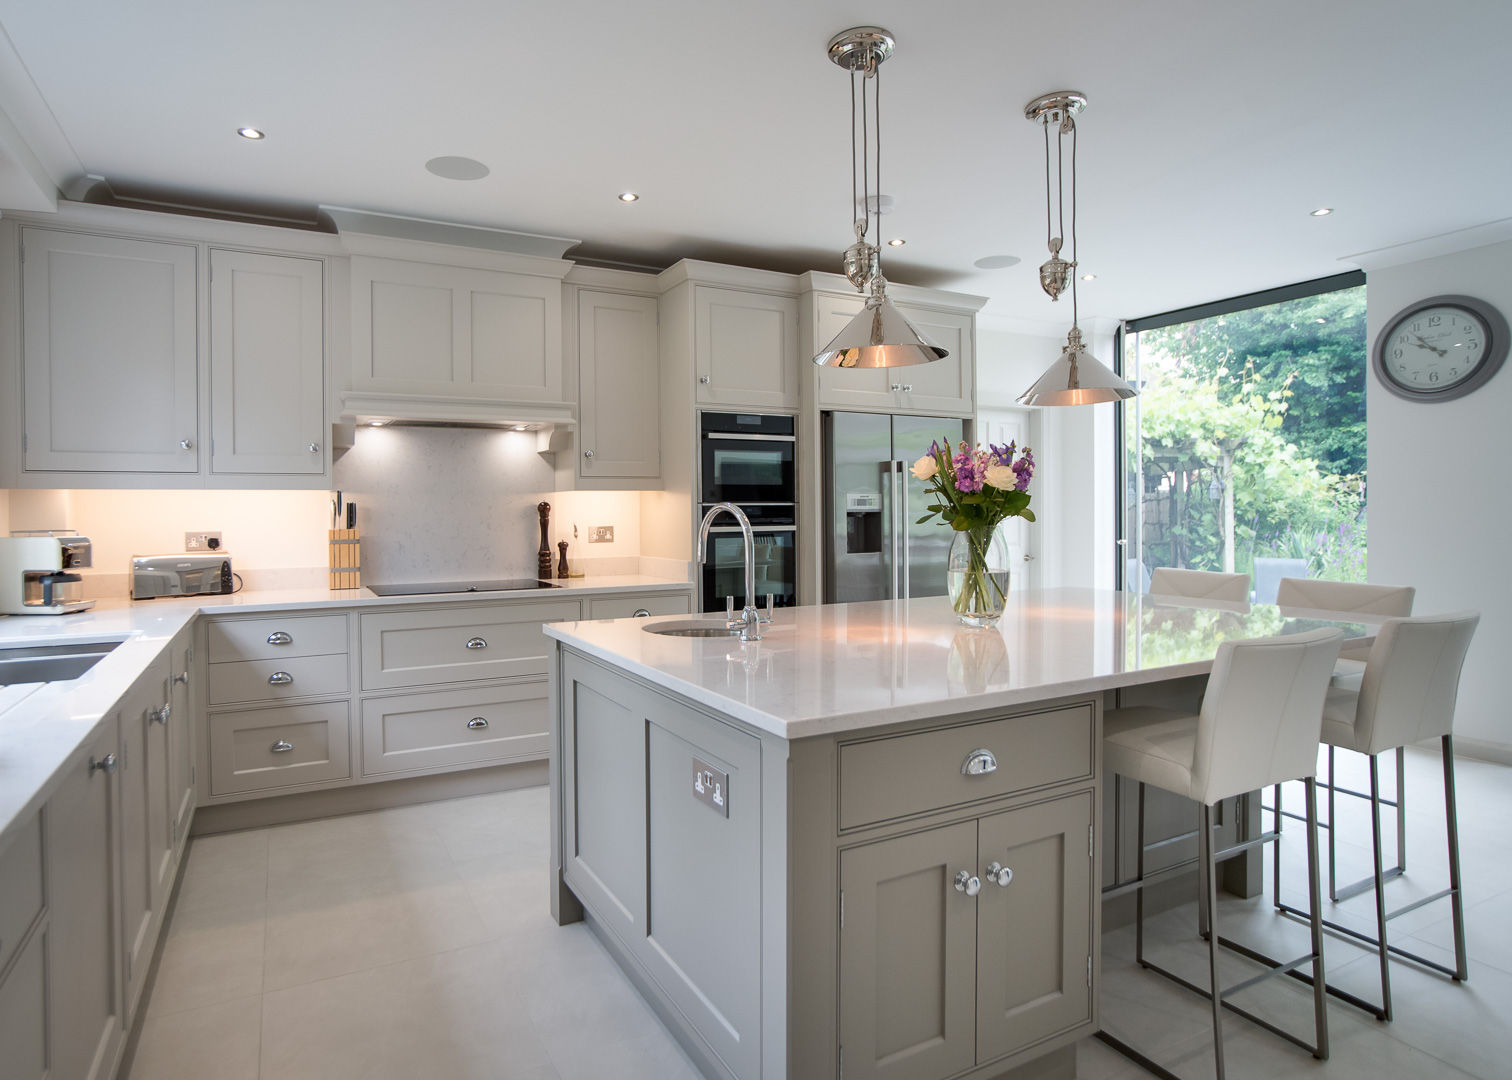 Luxurious, bespoke kitchen by John Ladbury John Ladbury and Company Cocinas equipadas white,modern,minimalist,quartz